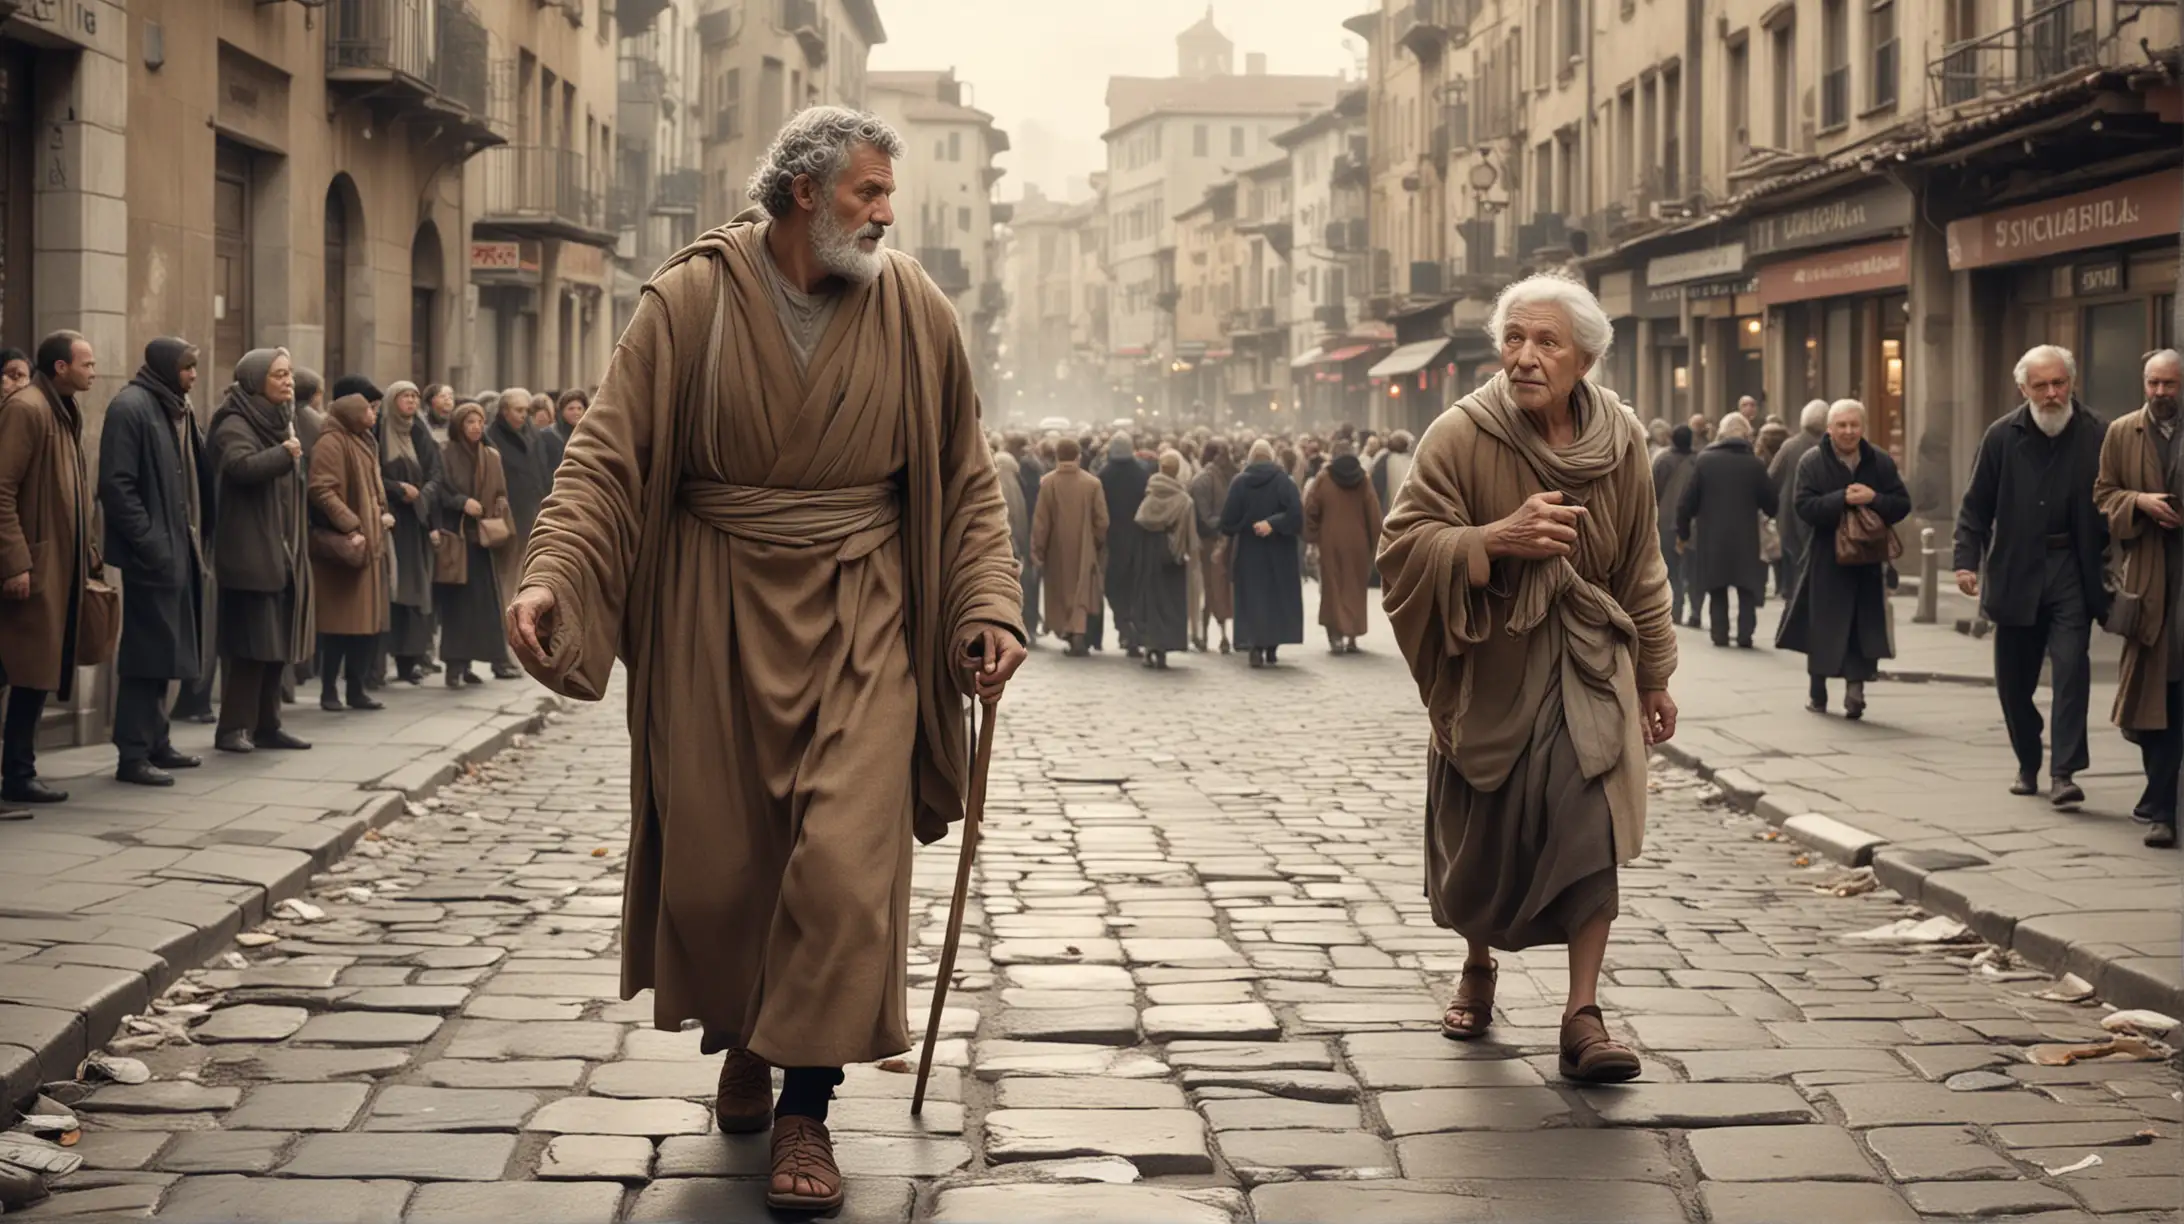 Stoic Philosopher Assisting Elderly Across Busy City Street